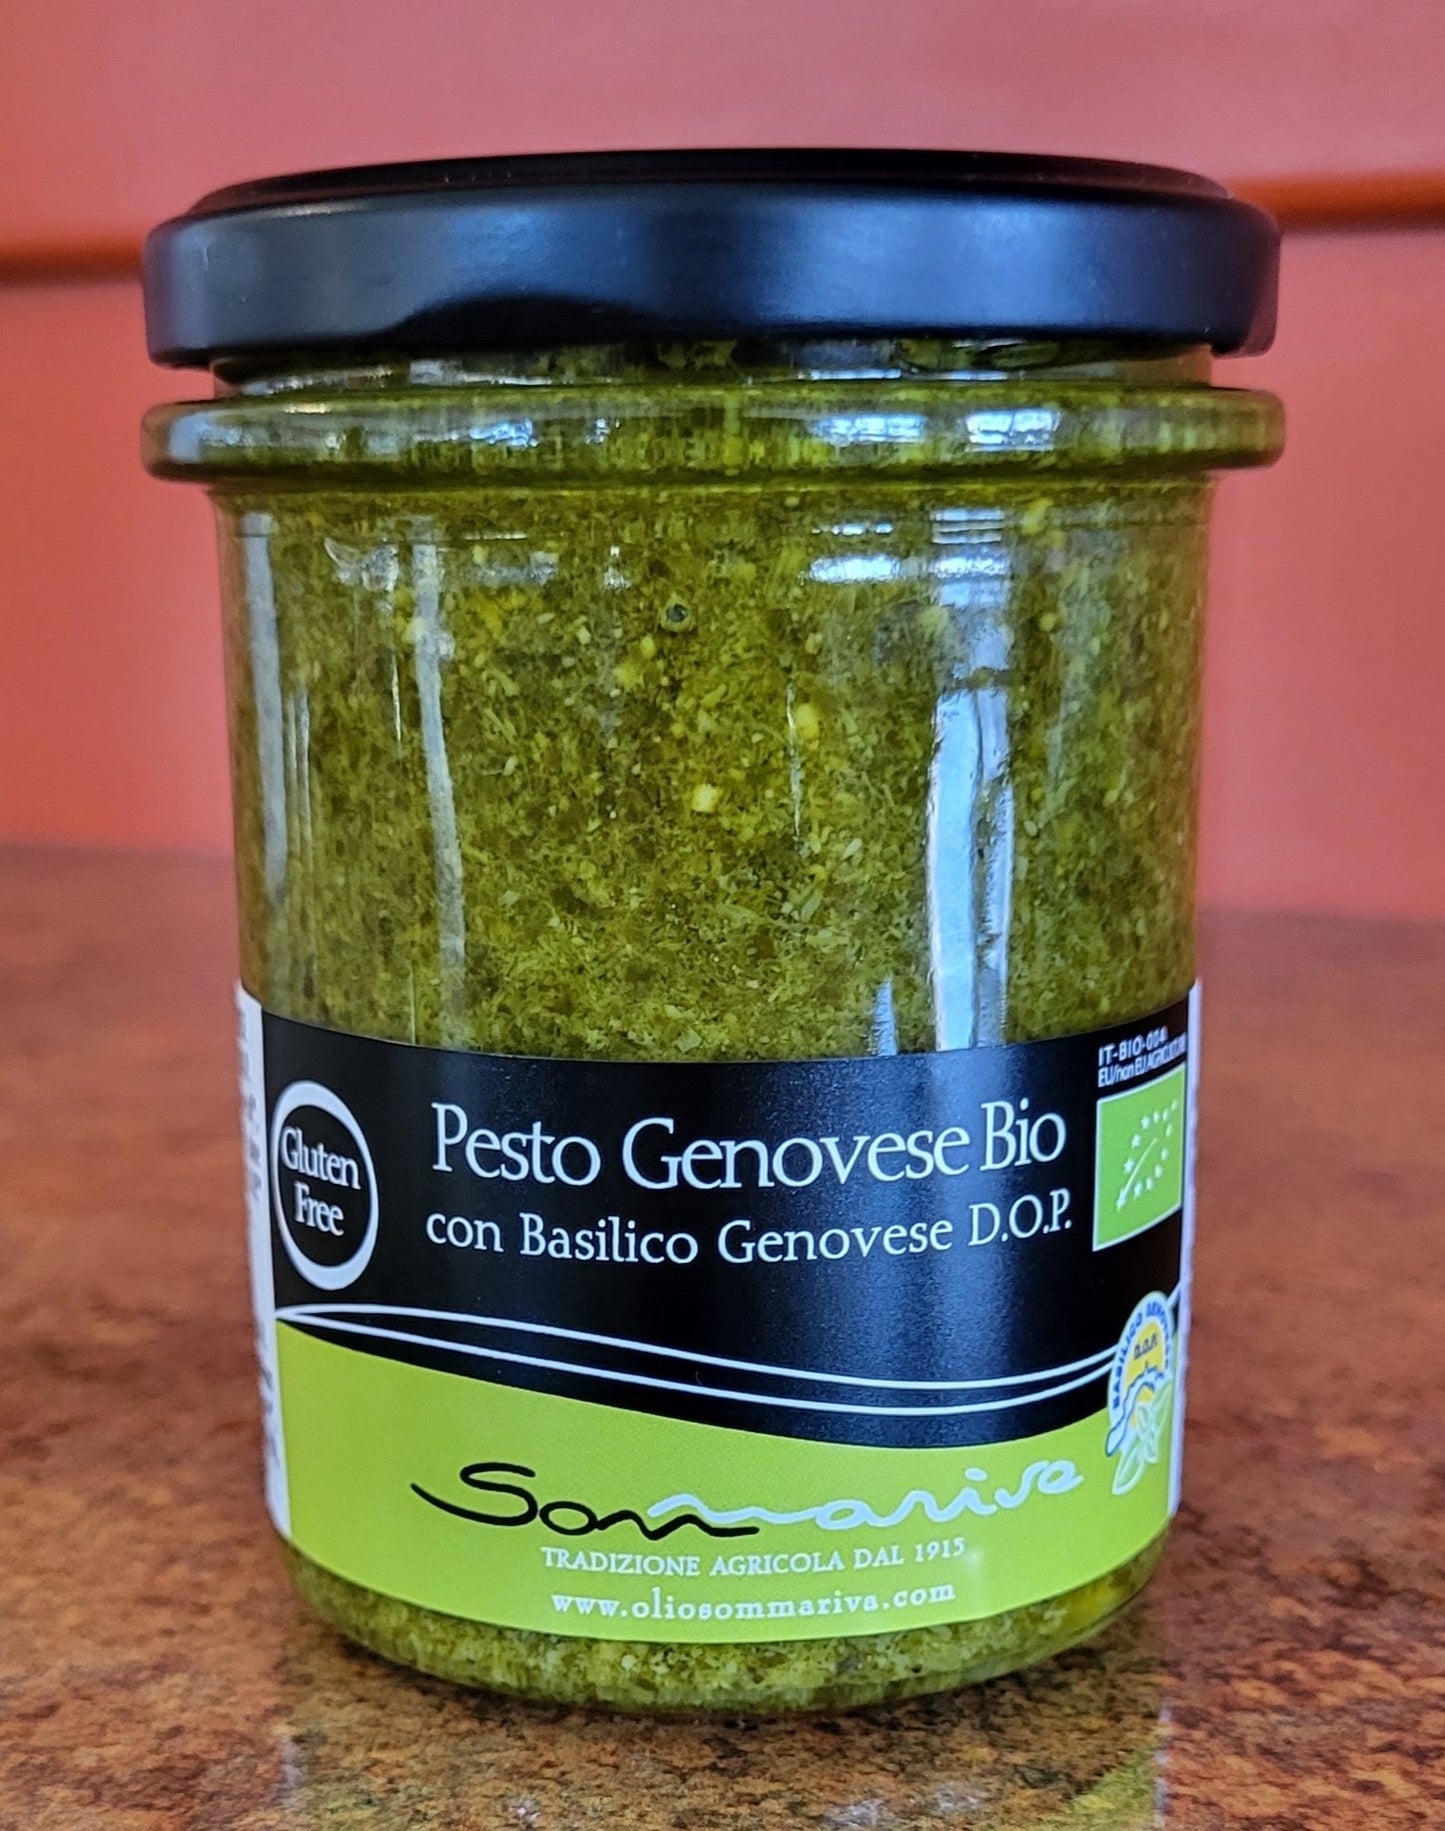 
                  
                    Organic Pesto Genovese D.O.P.
                  
                